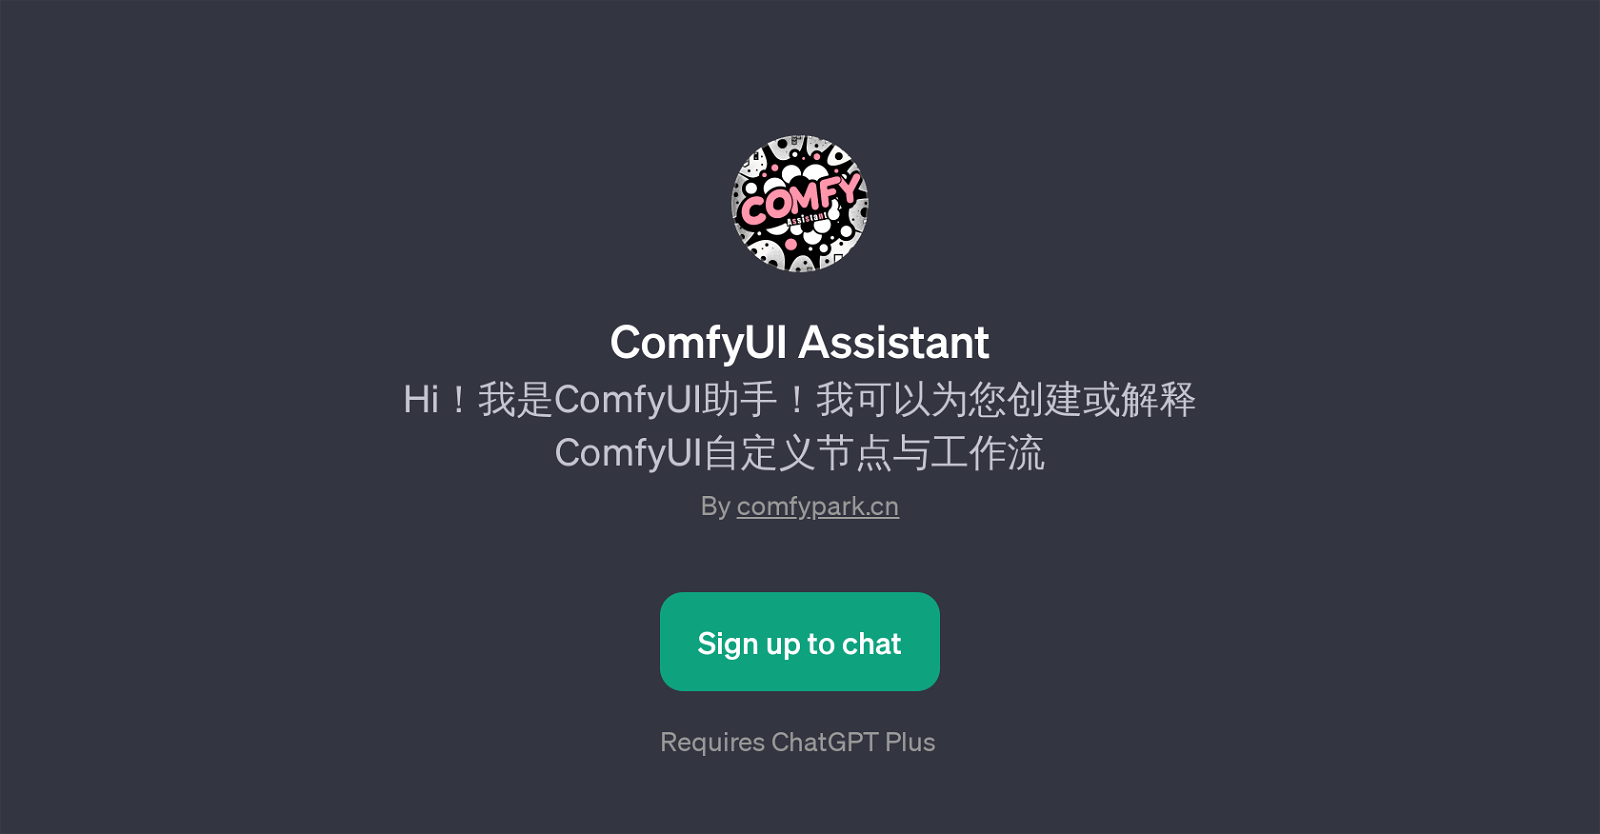 ComfyUI Assistant website